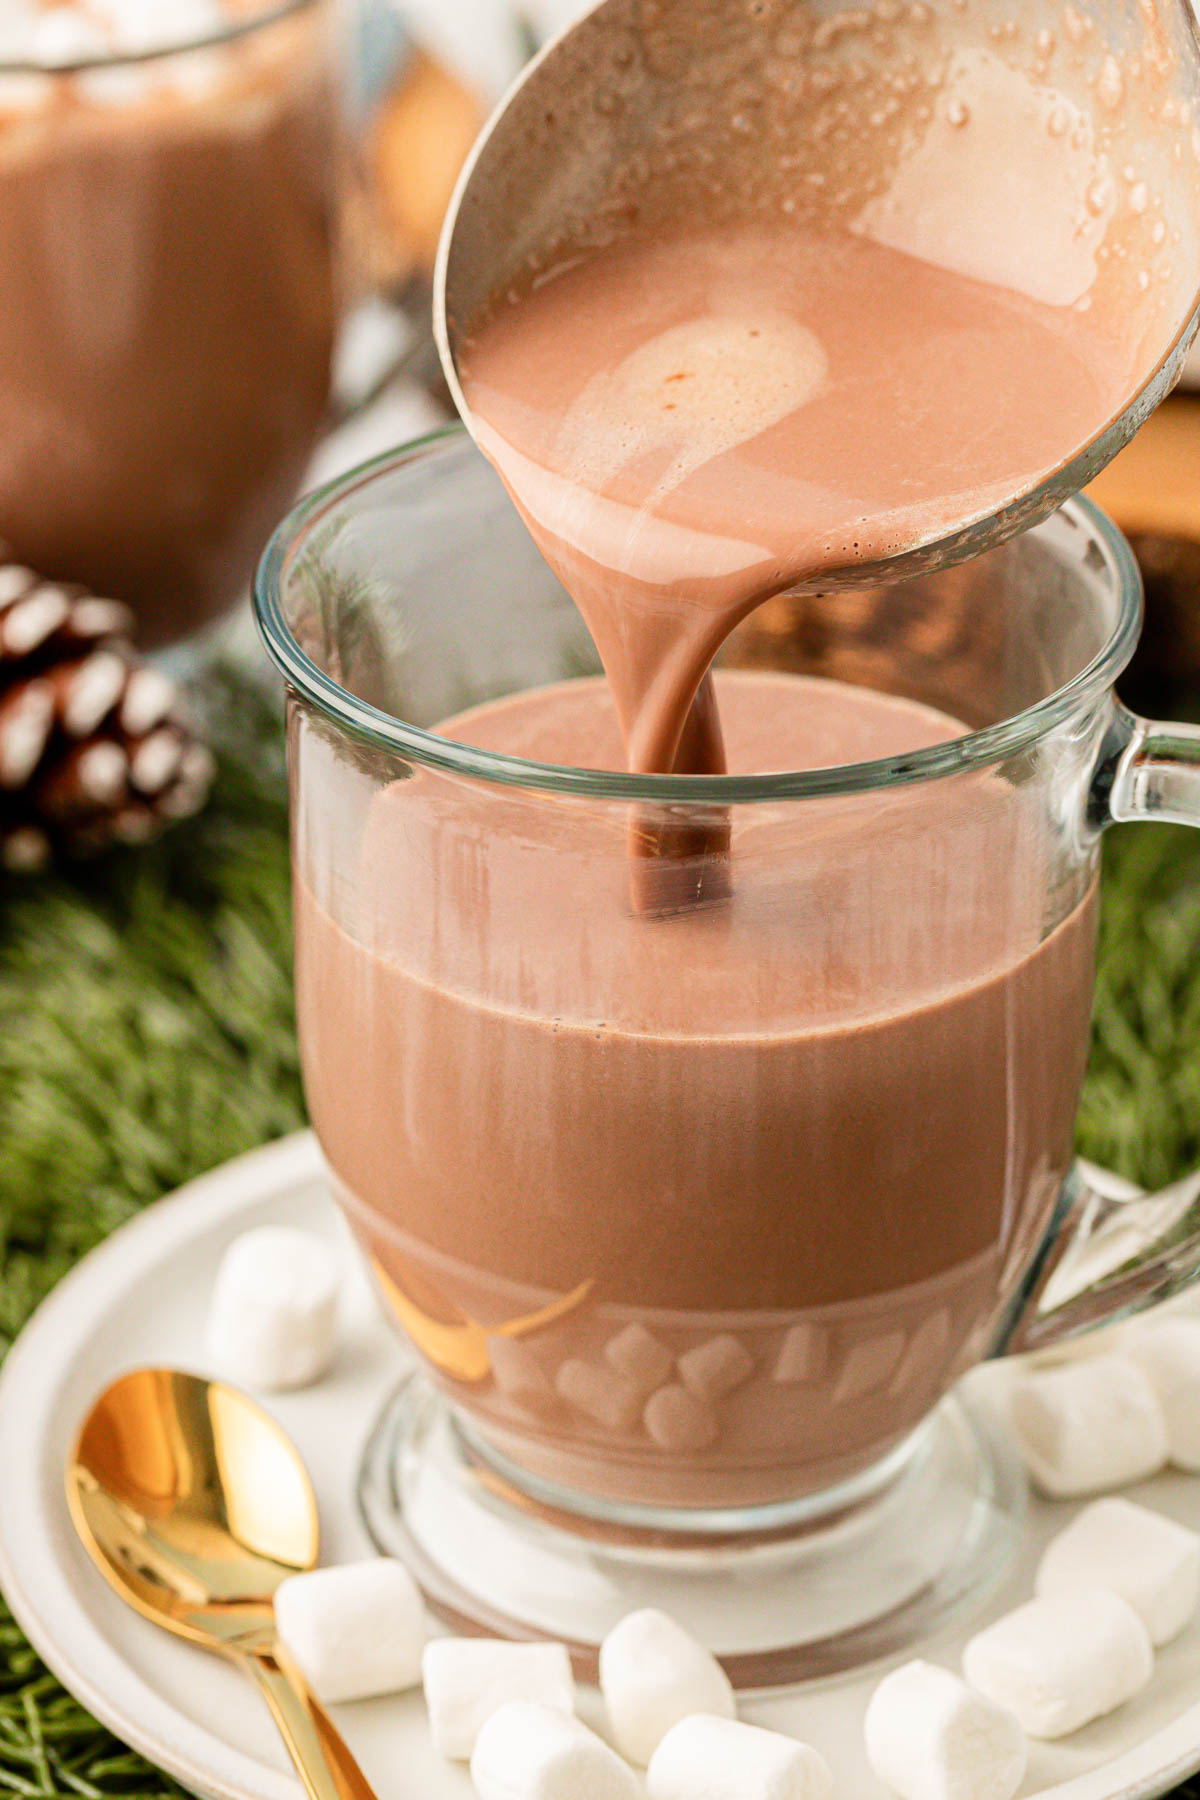 Hot chocolate being ladled into a glass mug.